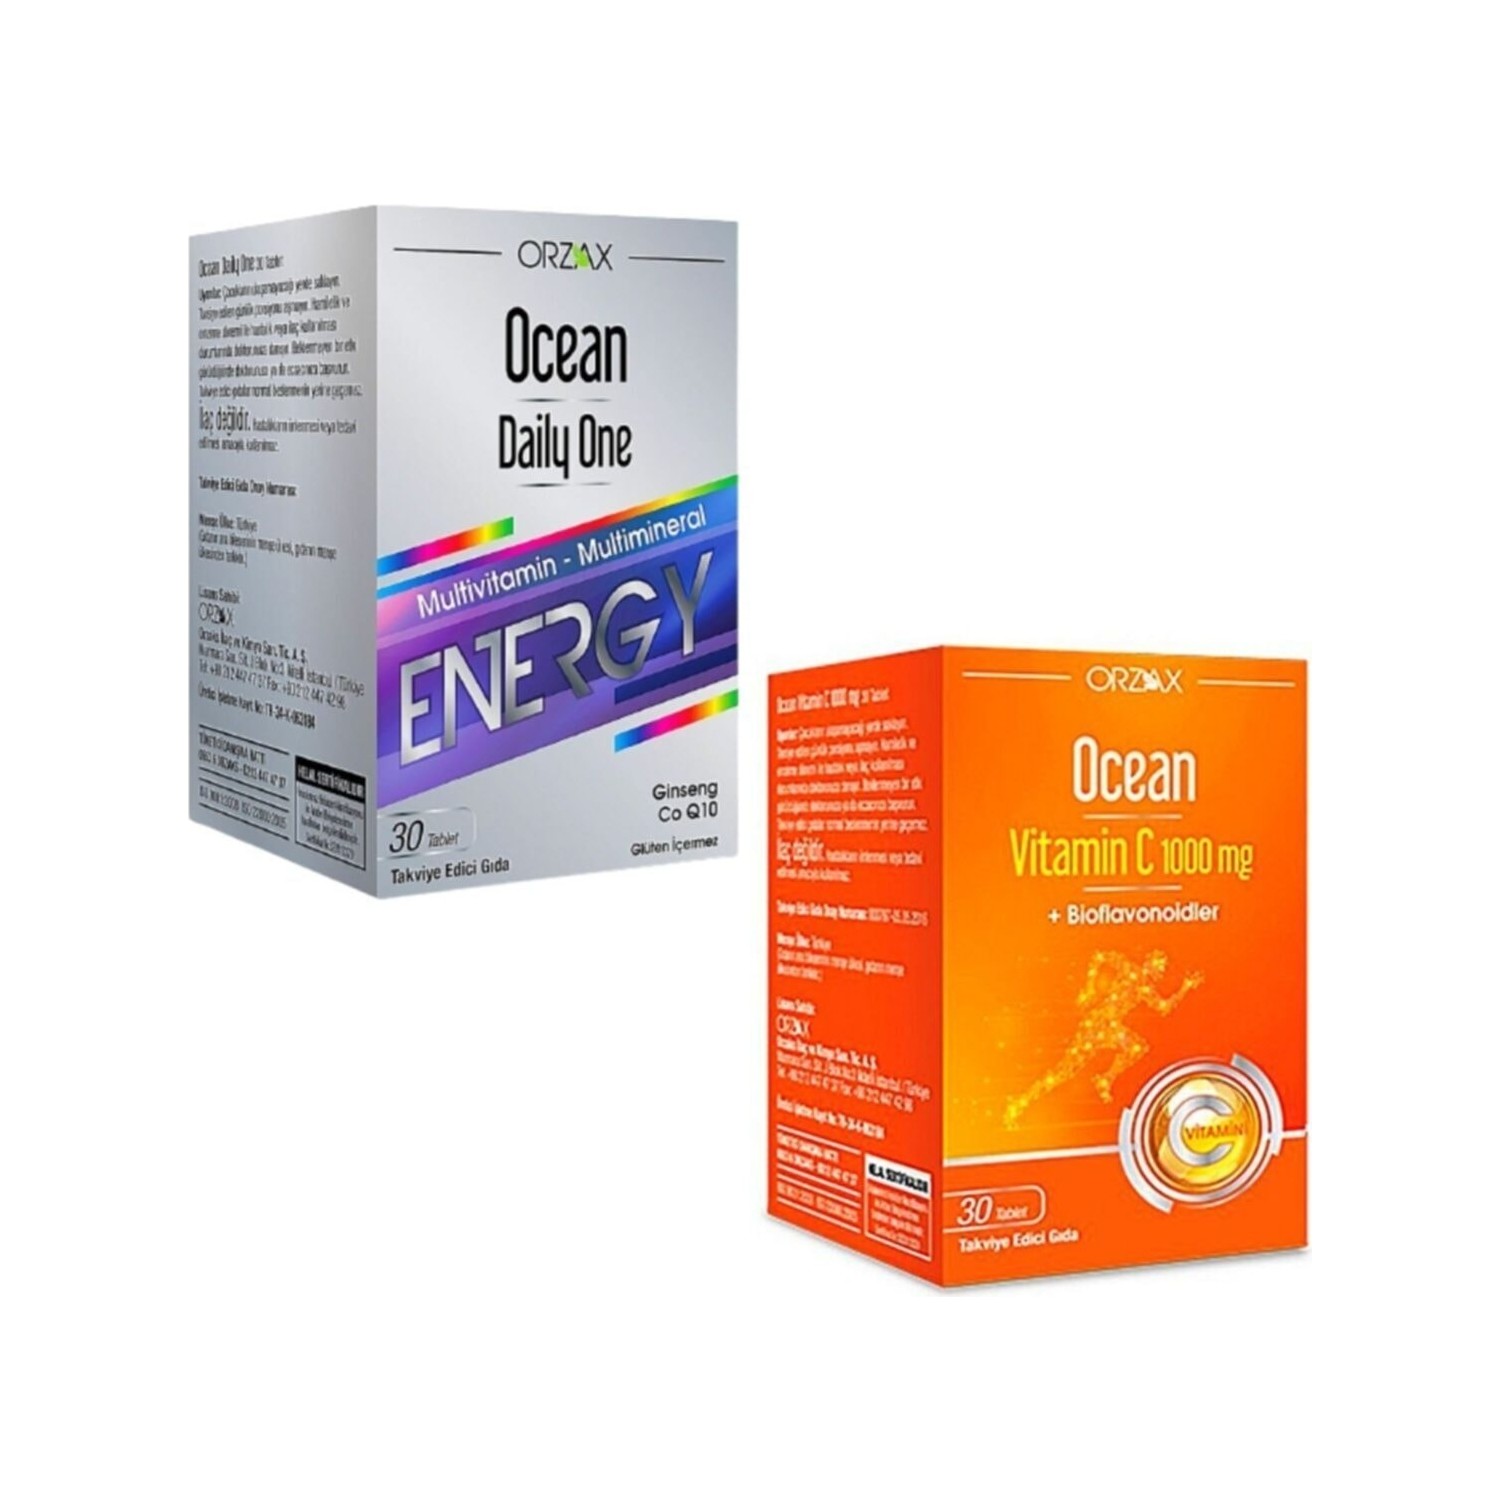 Мультивитамины Ocean Daily One Energy And Ocean Vitamin C Set набор мультивитаминов ocean daily one energy и ocean vitamin c